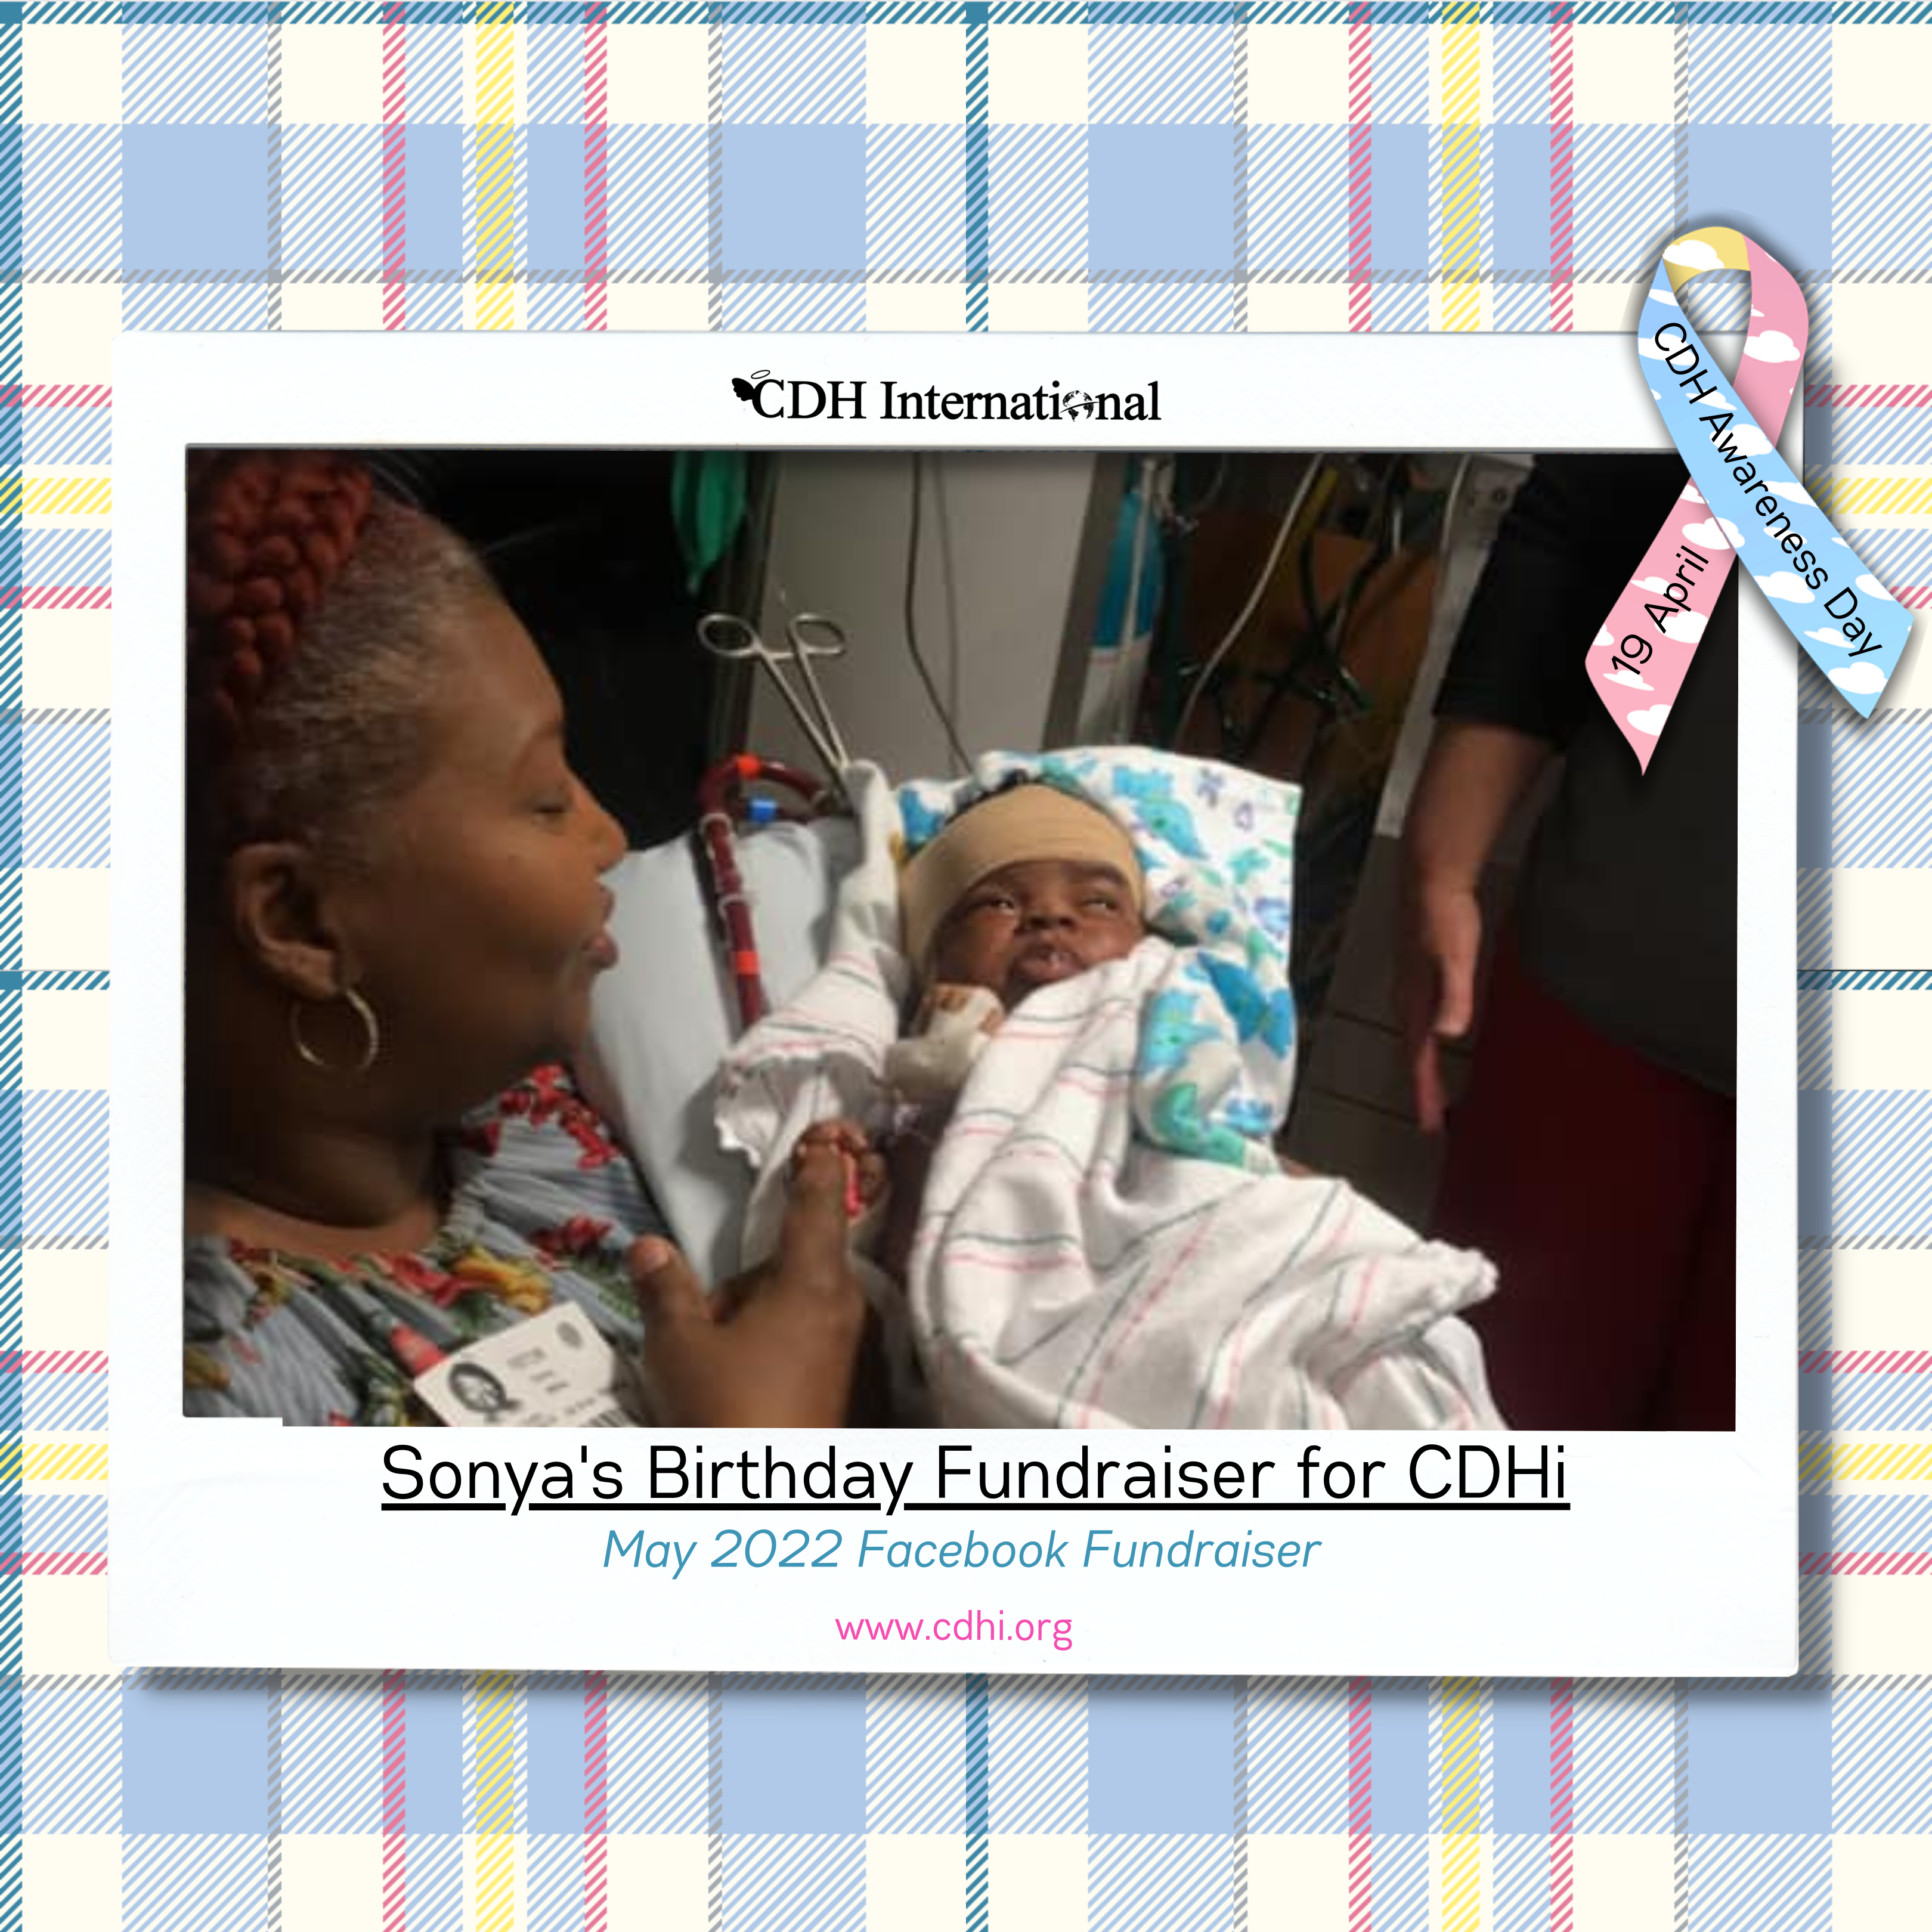 Chris’ Birthday Fundraiser for CDH International